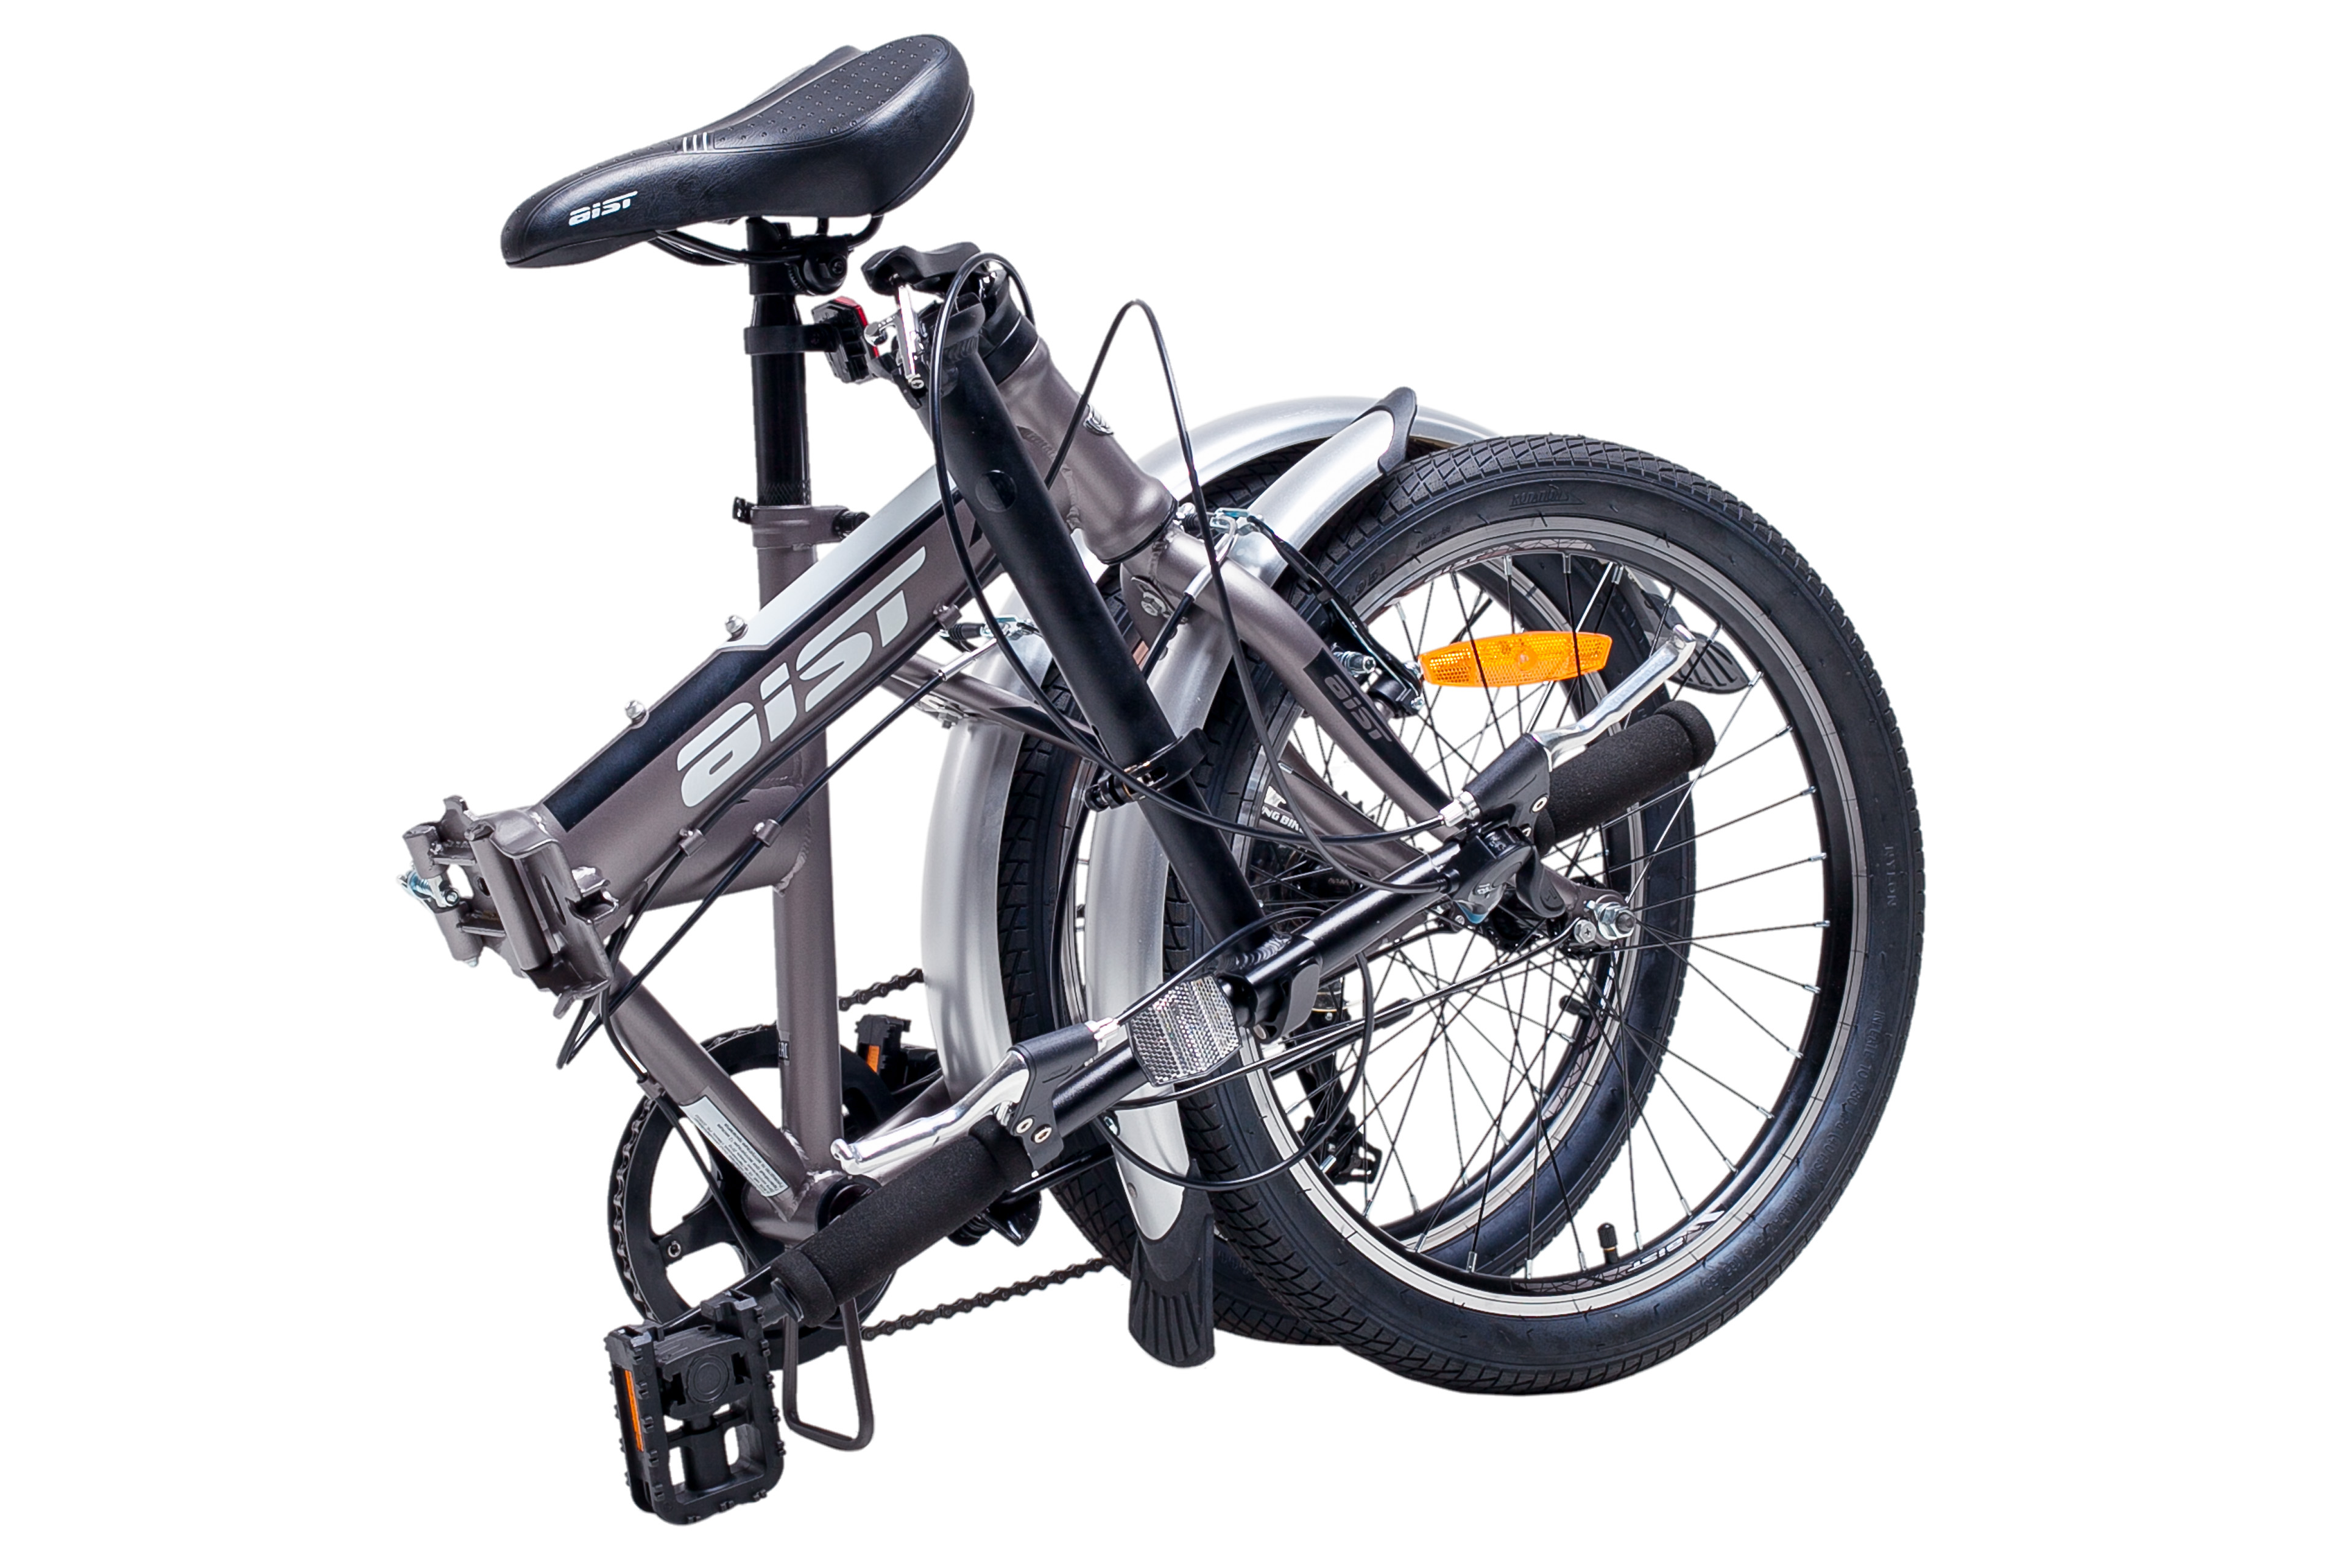 Велосипед компакт. Велосипед Aist Compact 1.0. Aist велосипед складной. Велосипед Аист складной 20 дюймов. Aist складной велосипед Compact 2.0.